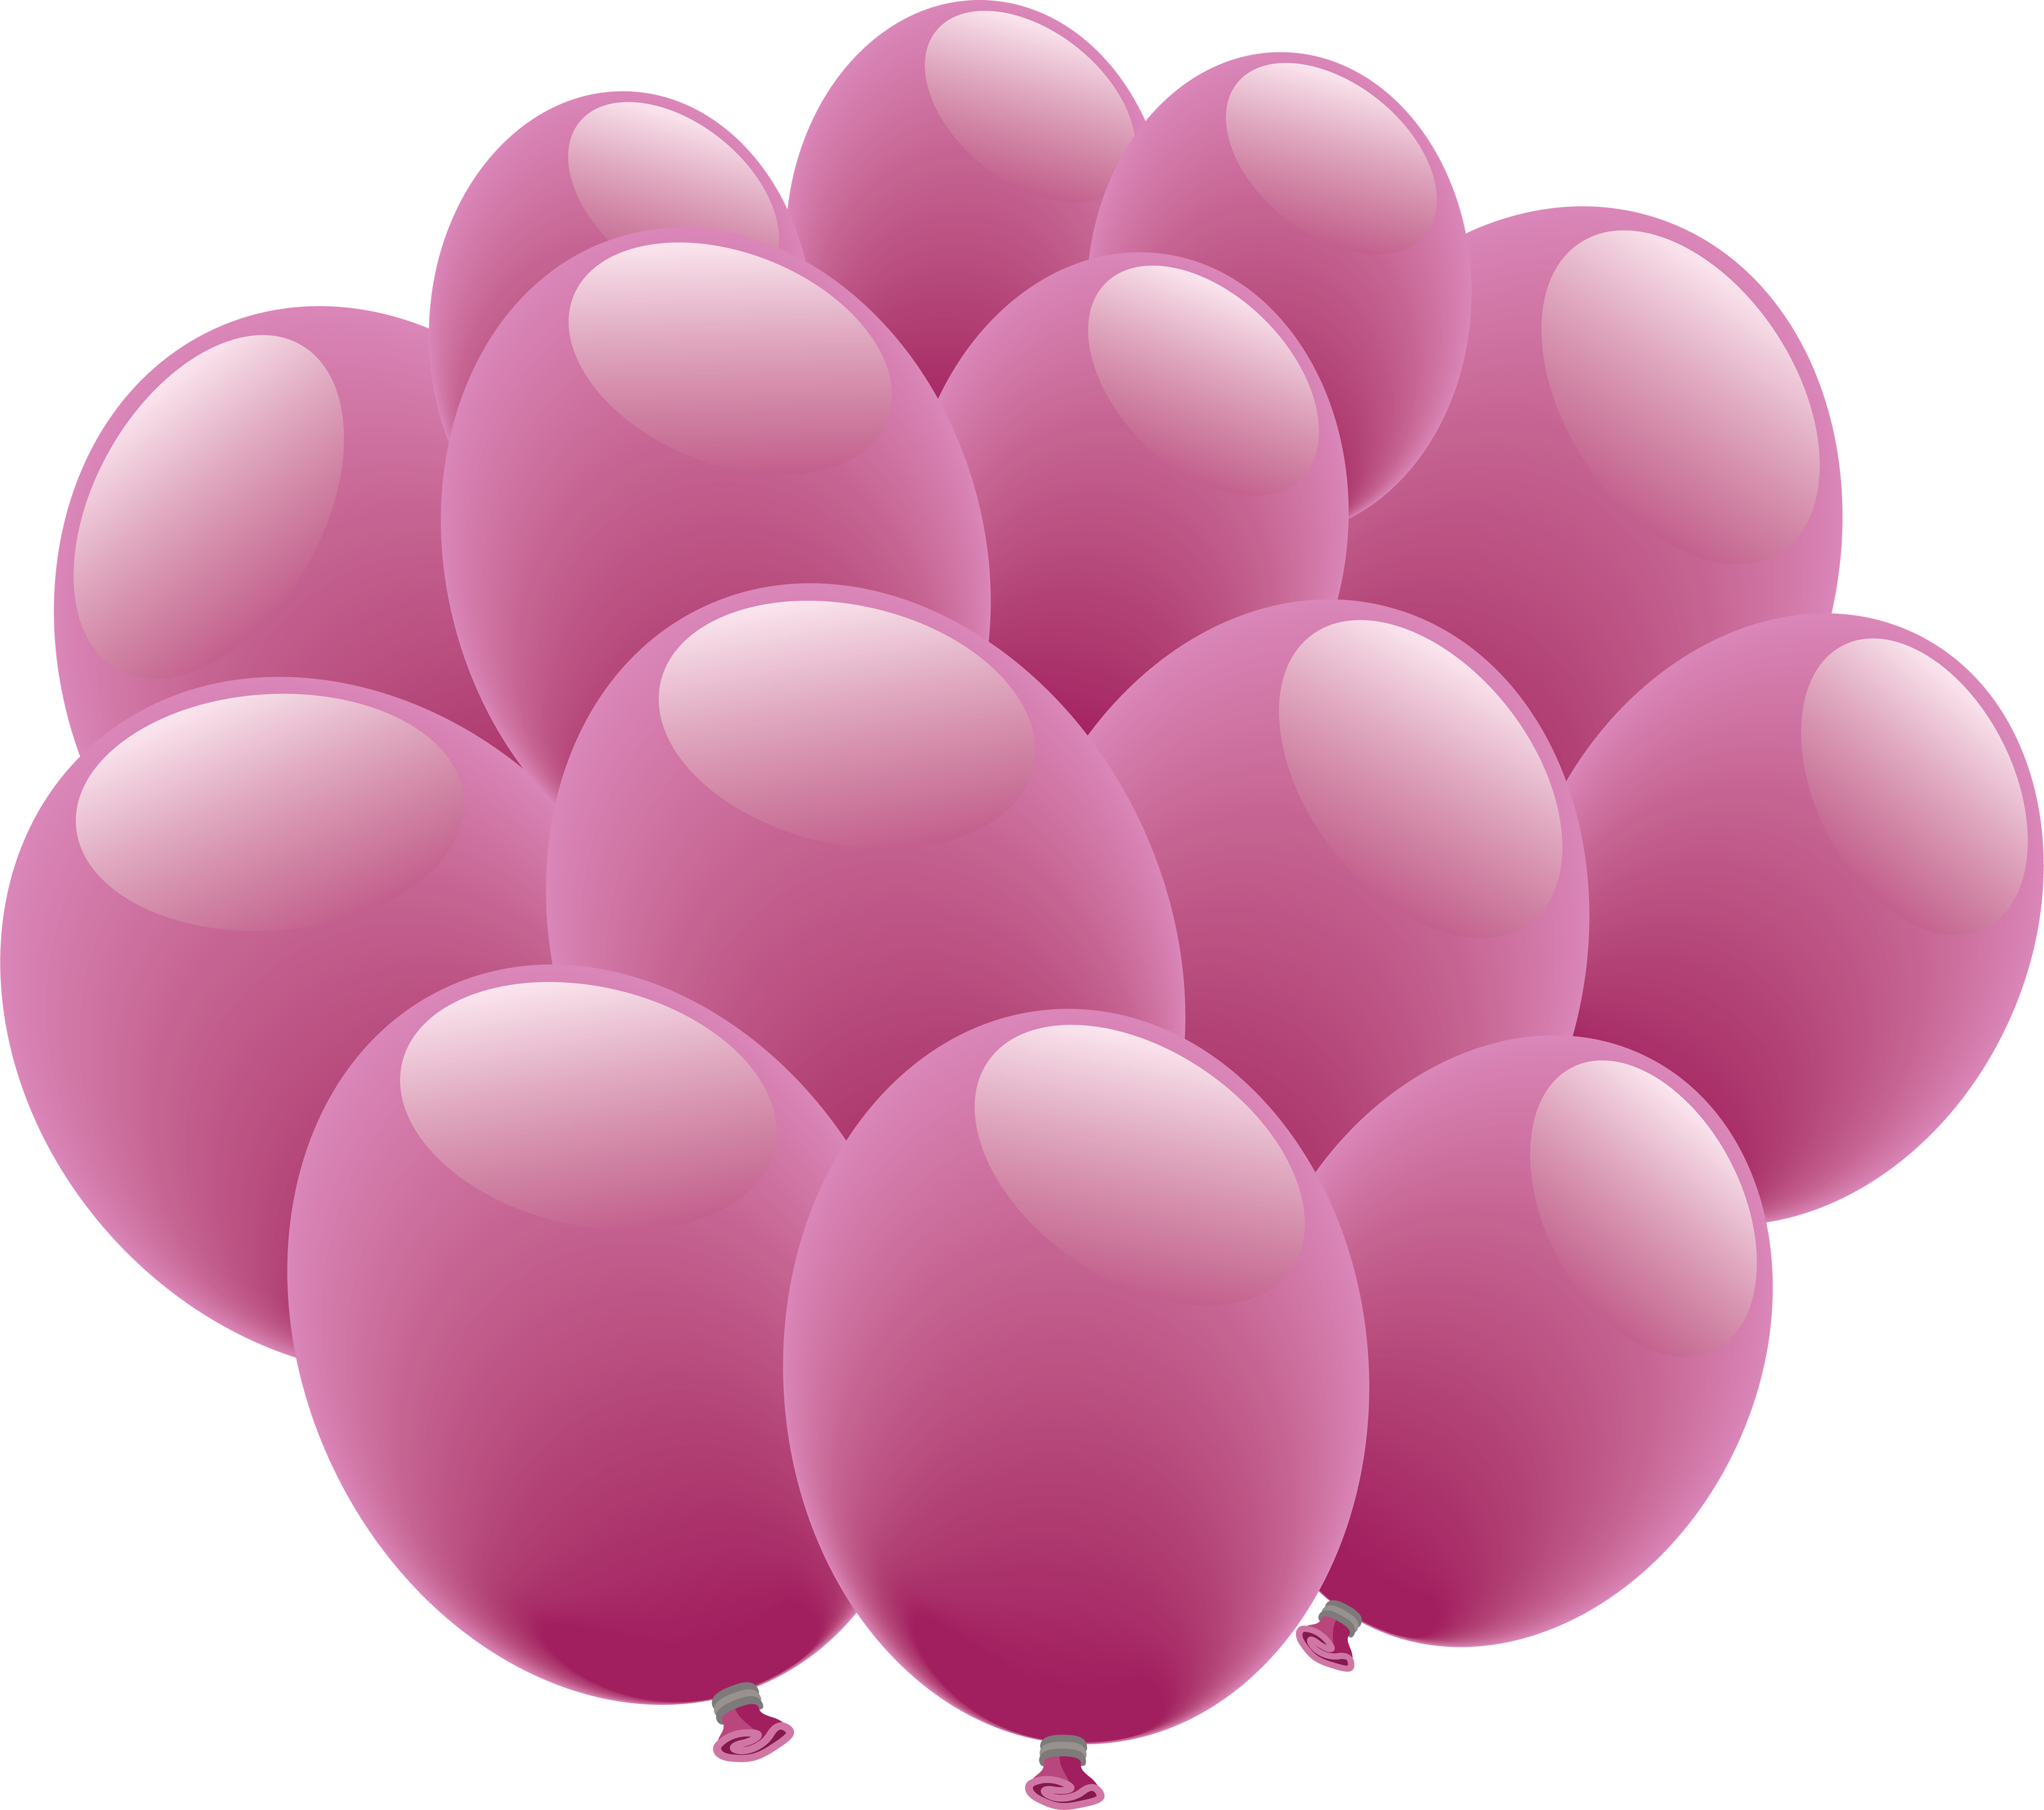 Many Pink Balloons PNG Image